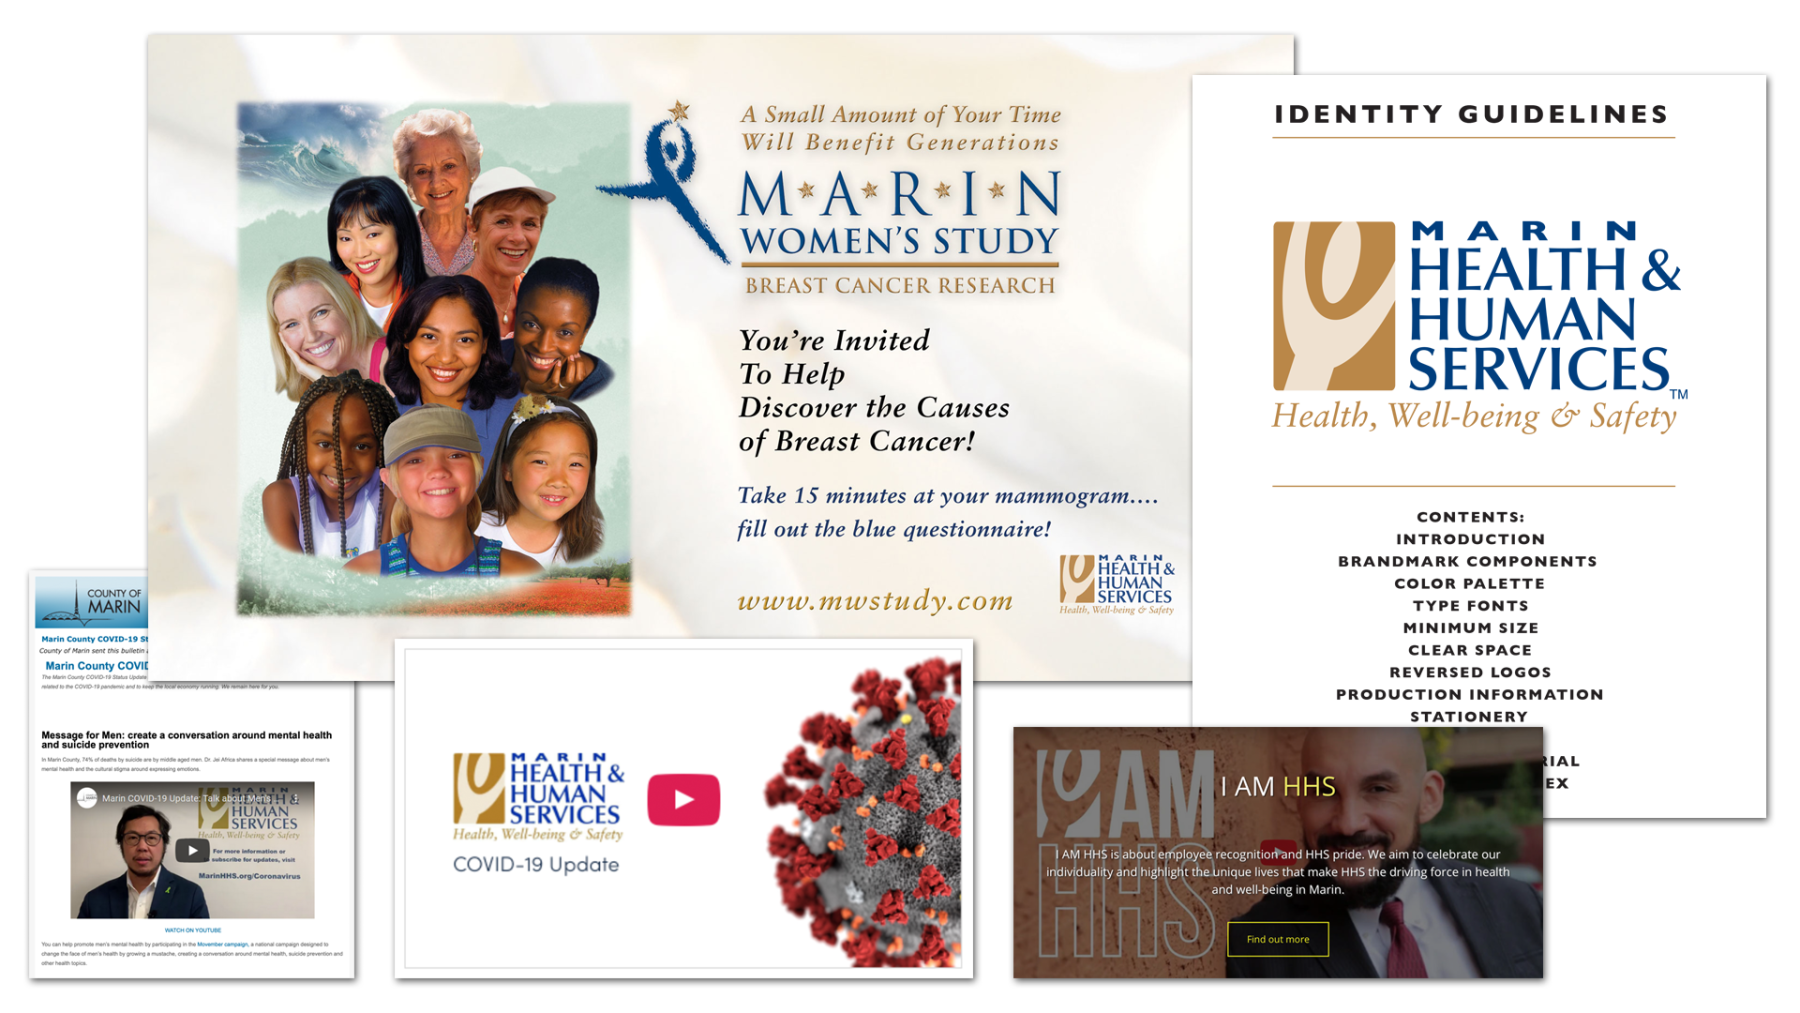 Marin Health & Human Services branding exhibit